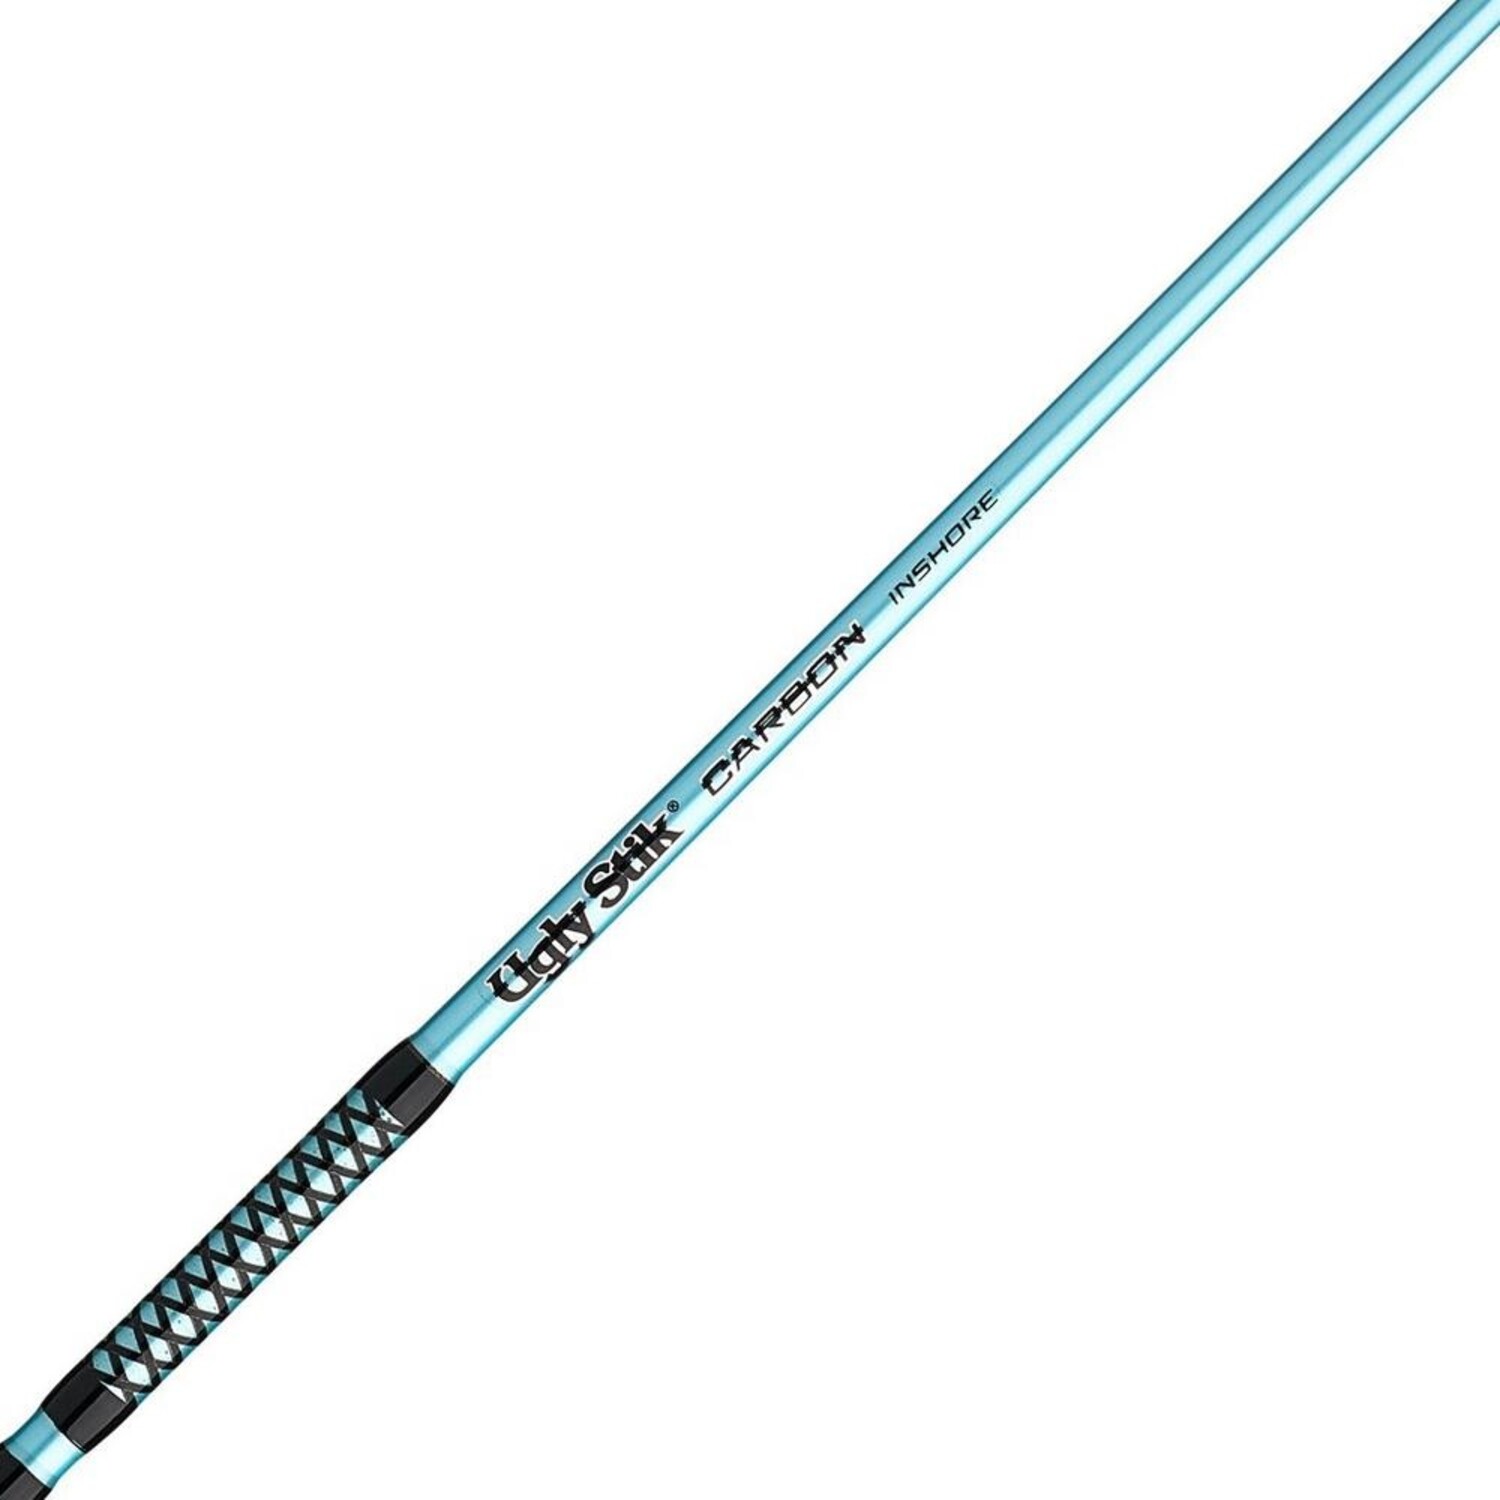 Ugly Stik Carbon Baitcast Combo Fishing Rod & Reel (Model: 7